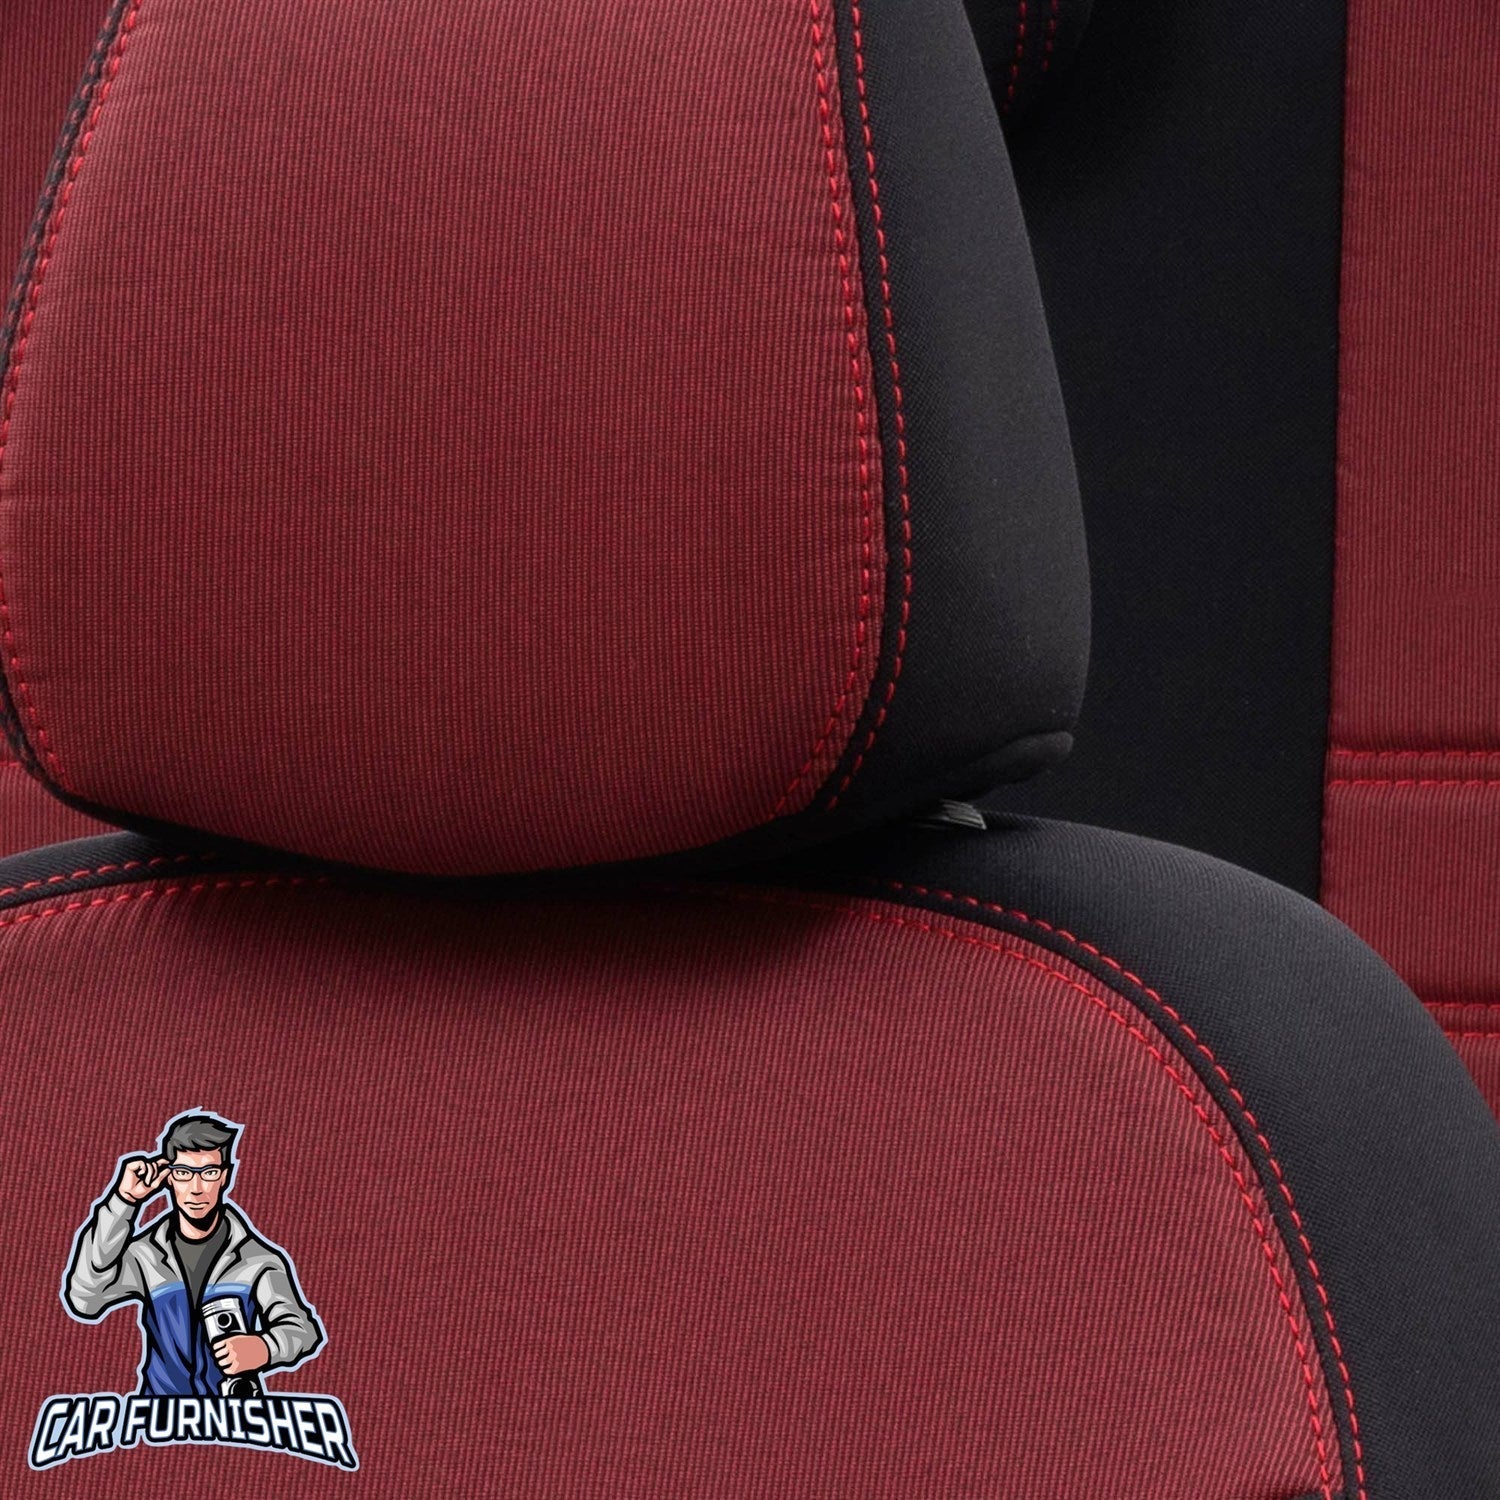 Chery Alia Seat Covers Original Jacquard Design Red Jacquard Fabric